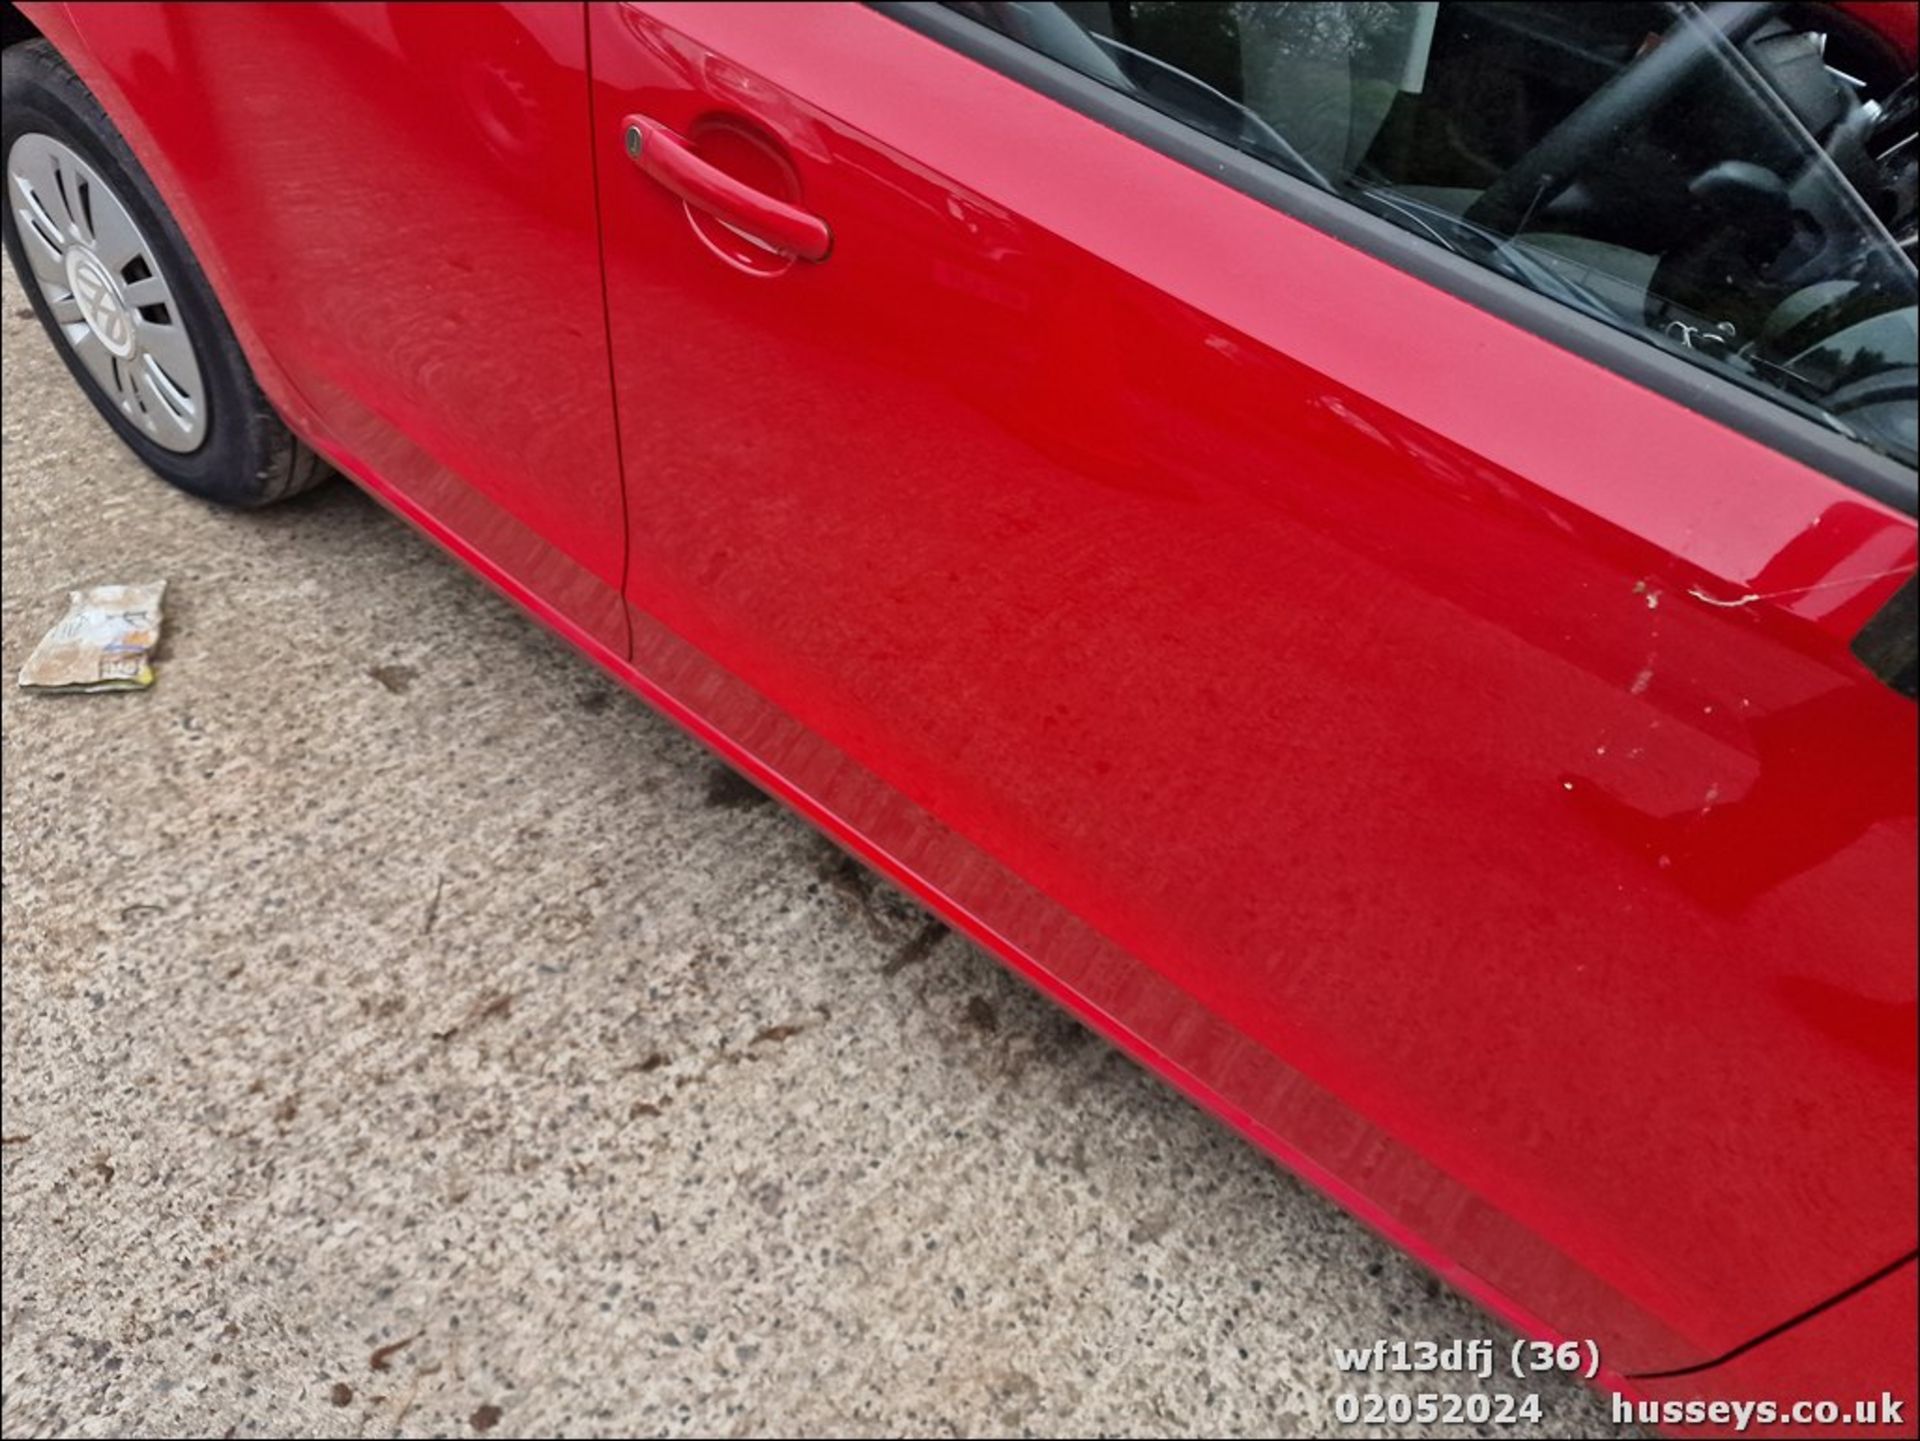 13/13 VOLKSWAGEN MOVE UP AUTO - 999cc 5dr Hatchback (Red, 17k) - Image 37 of 46